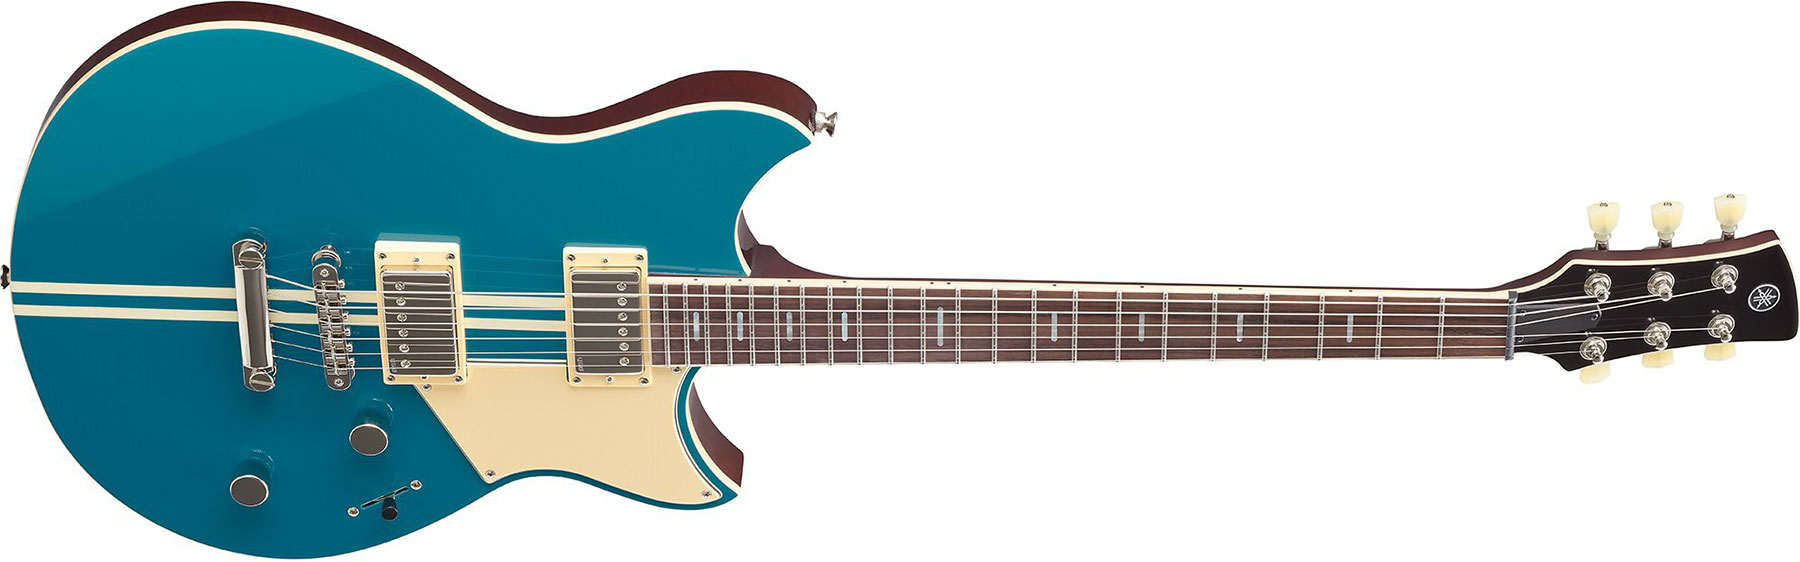 Yamaha Rss20 Revstar Standard Hh Ht Rw - Swift Blue - Guitarra eléctrica de doble corte - Variation 1